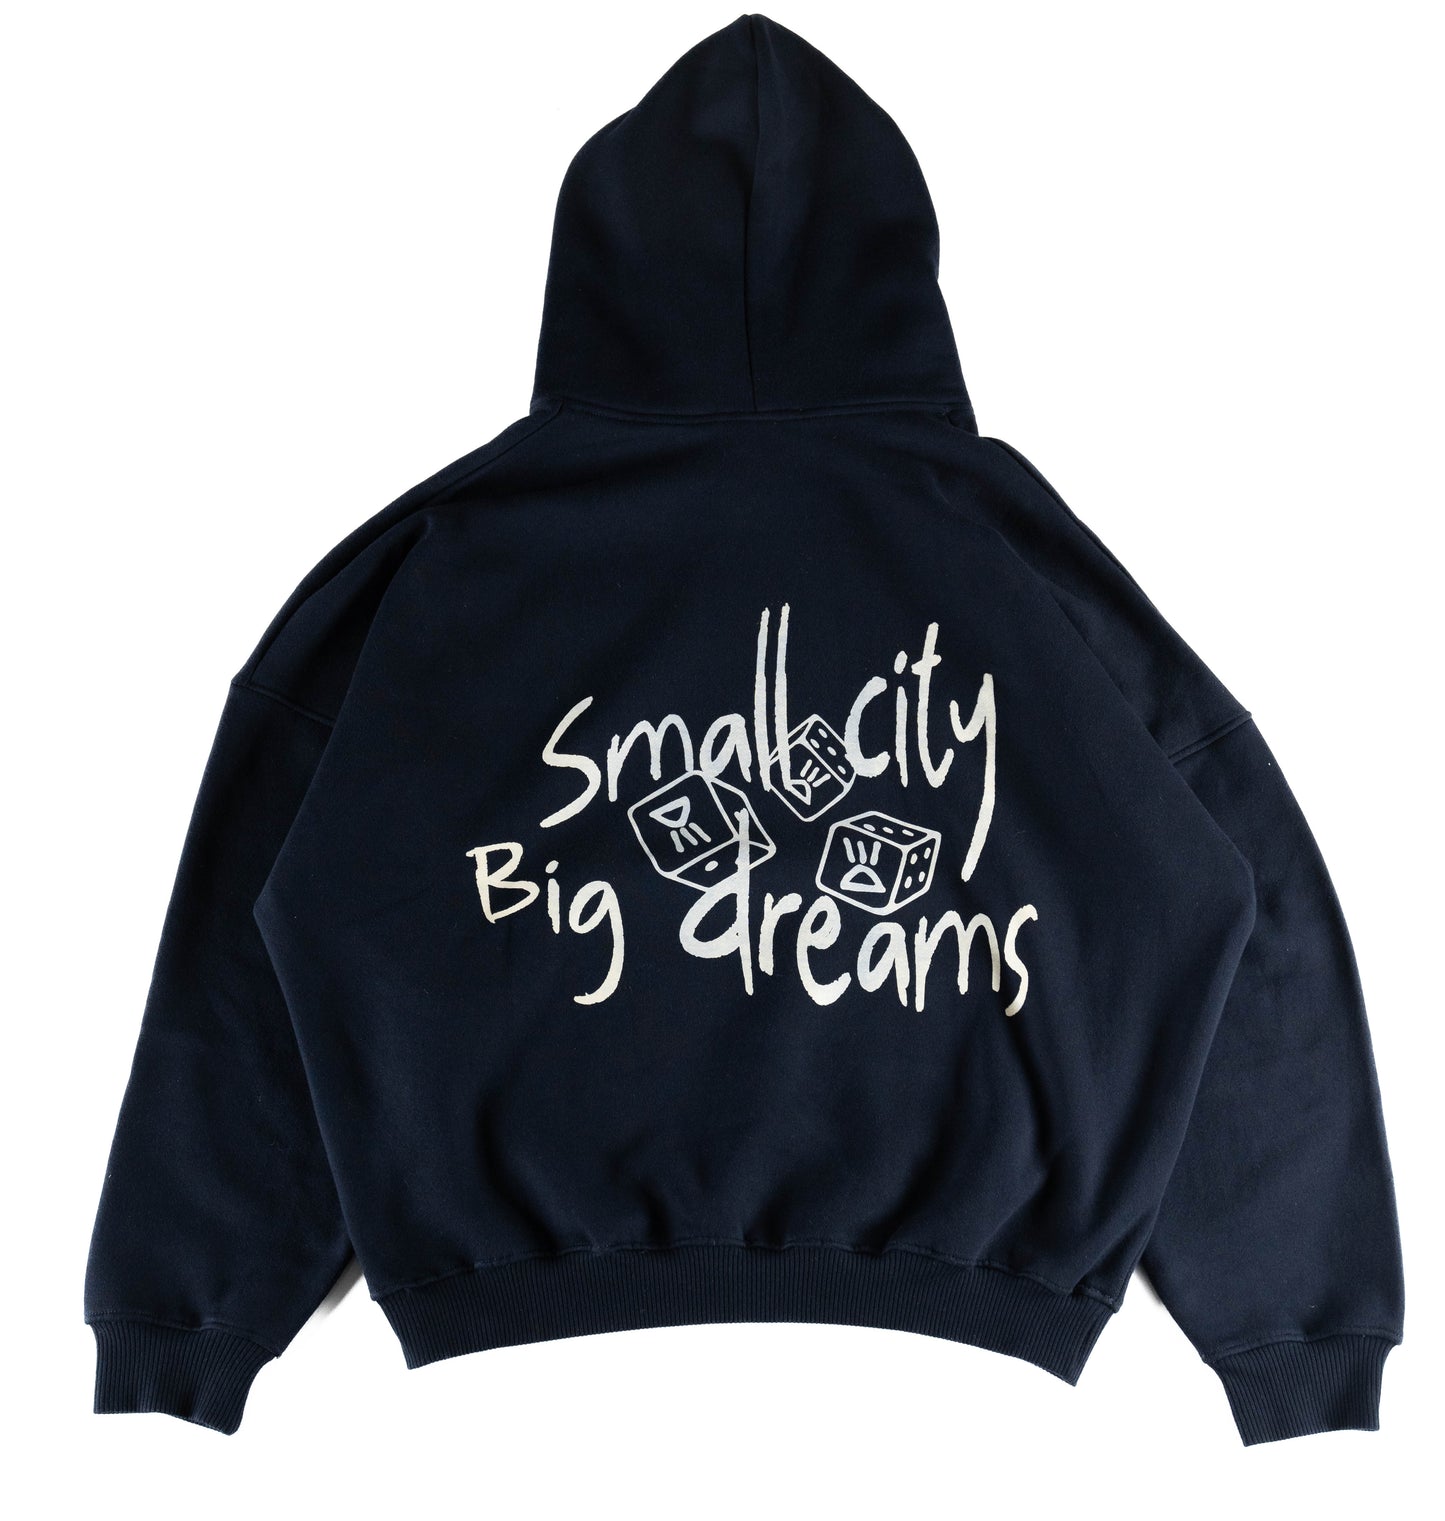 Dusk blue small city big dreams hoodie